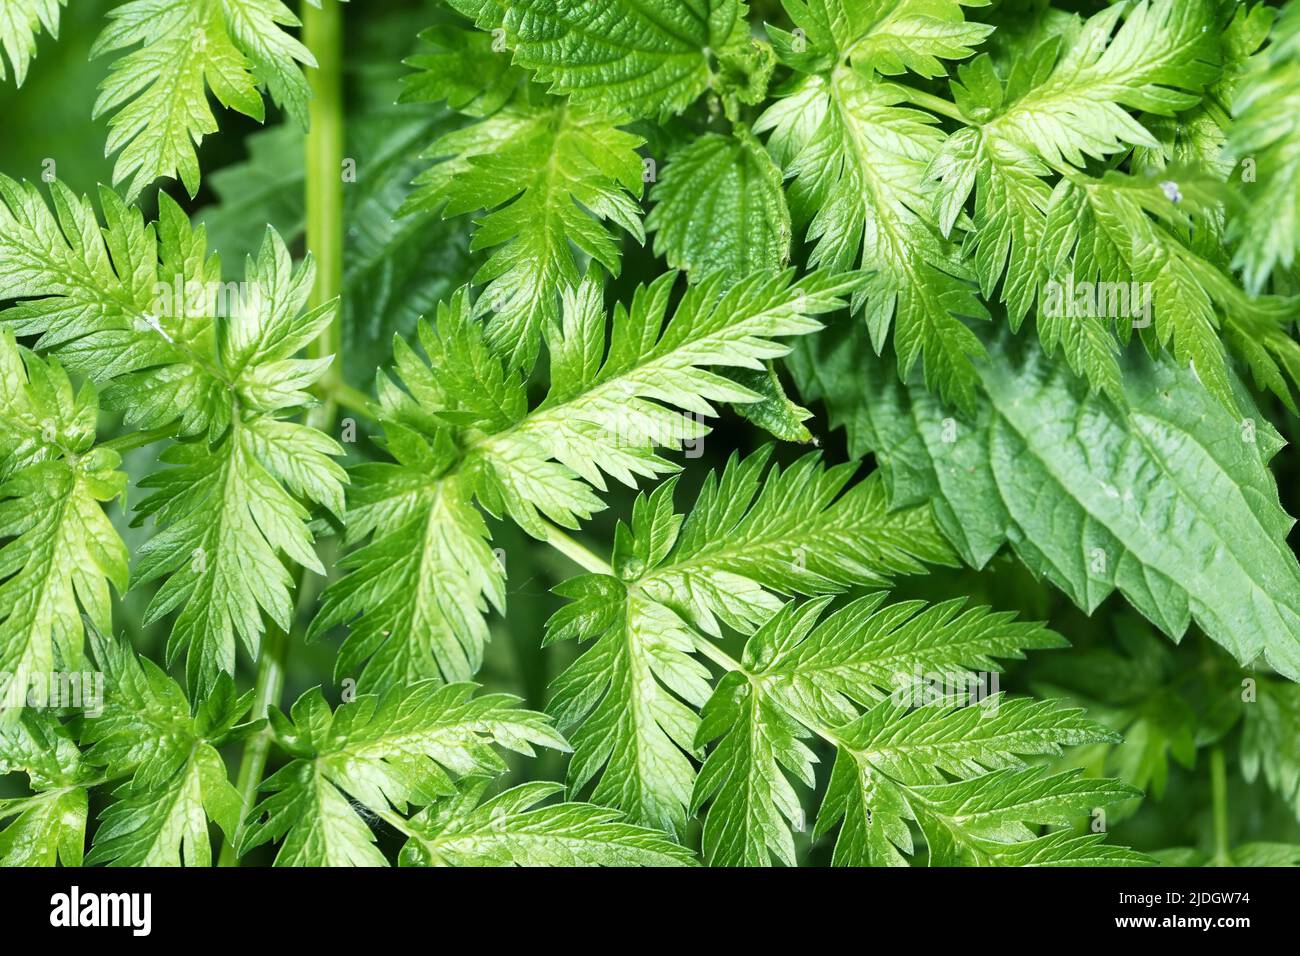 Primer plano de fondo de hojas verdes frescas de verano Foto de stock